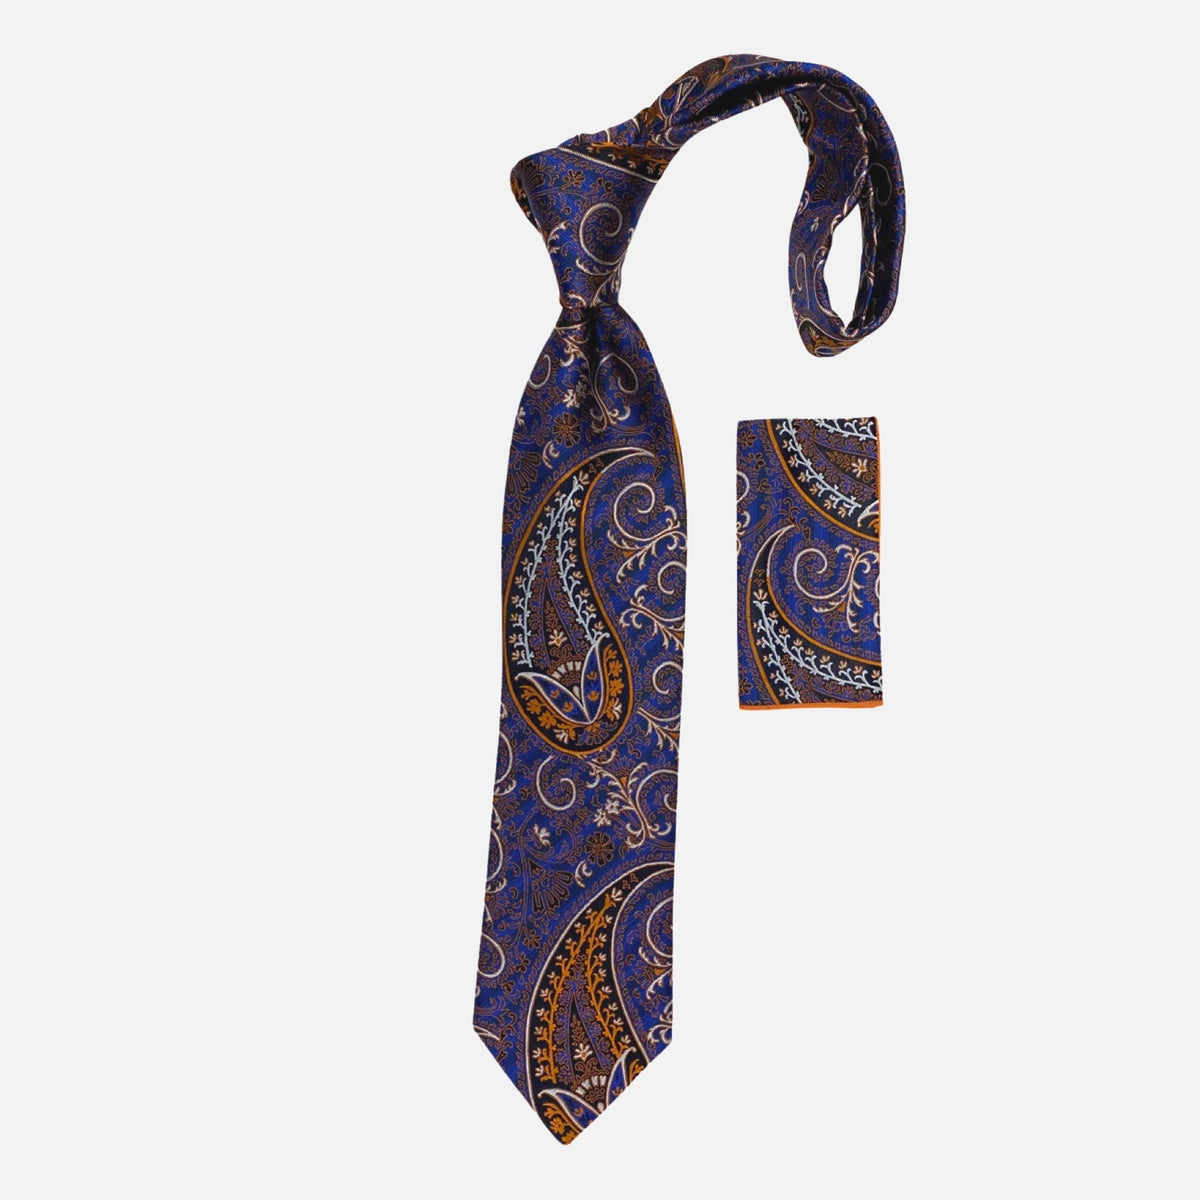 100% silk paisley blue tie by Steven Land